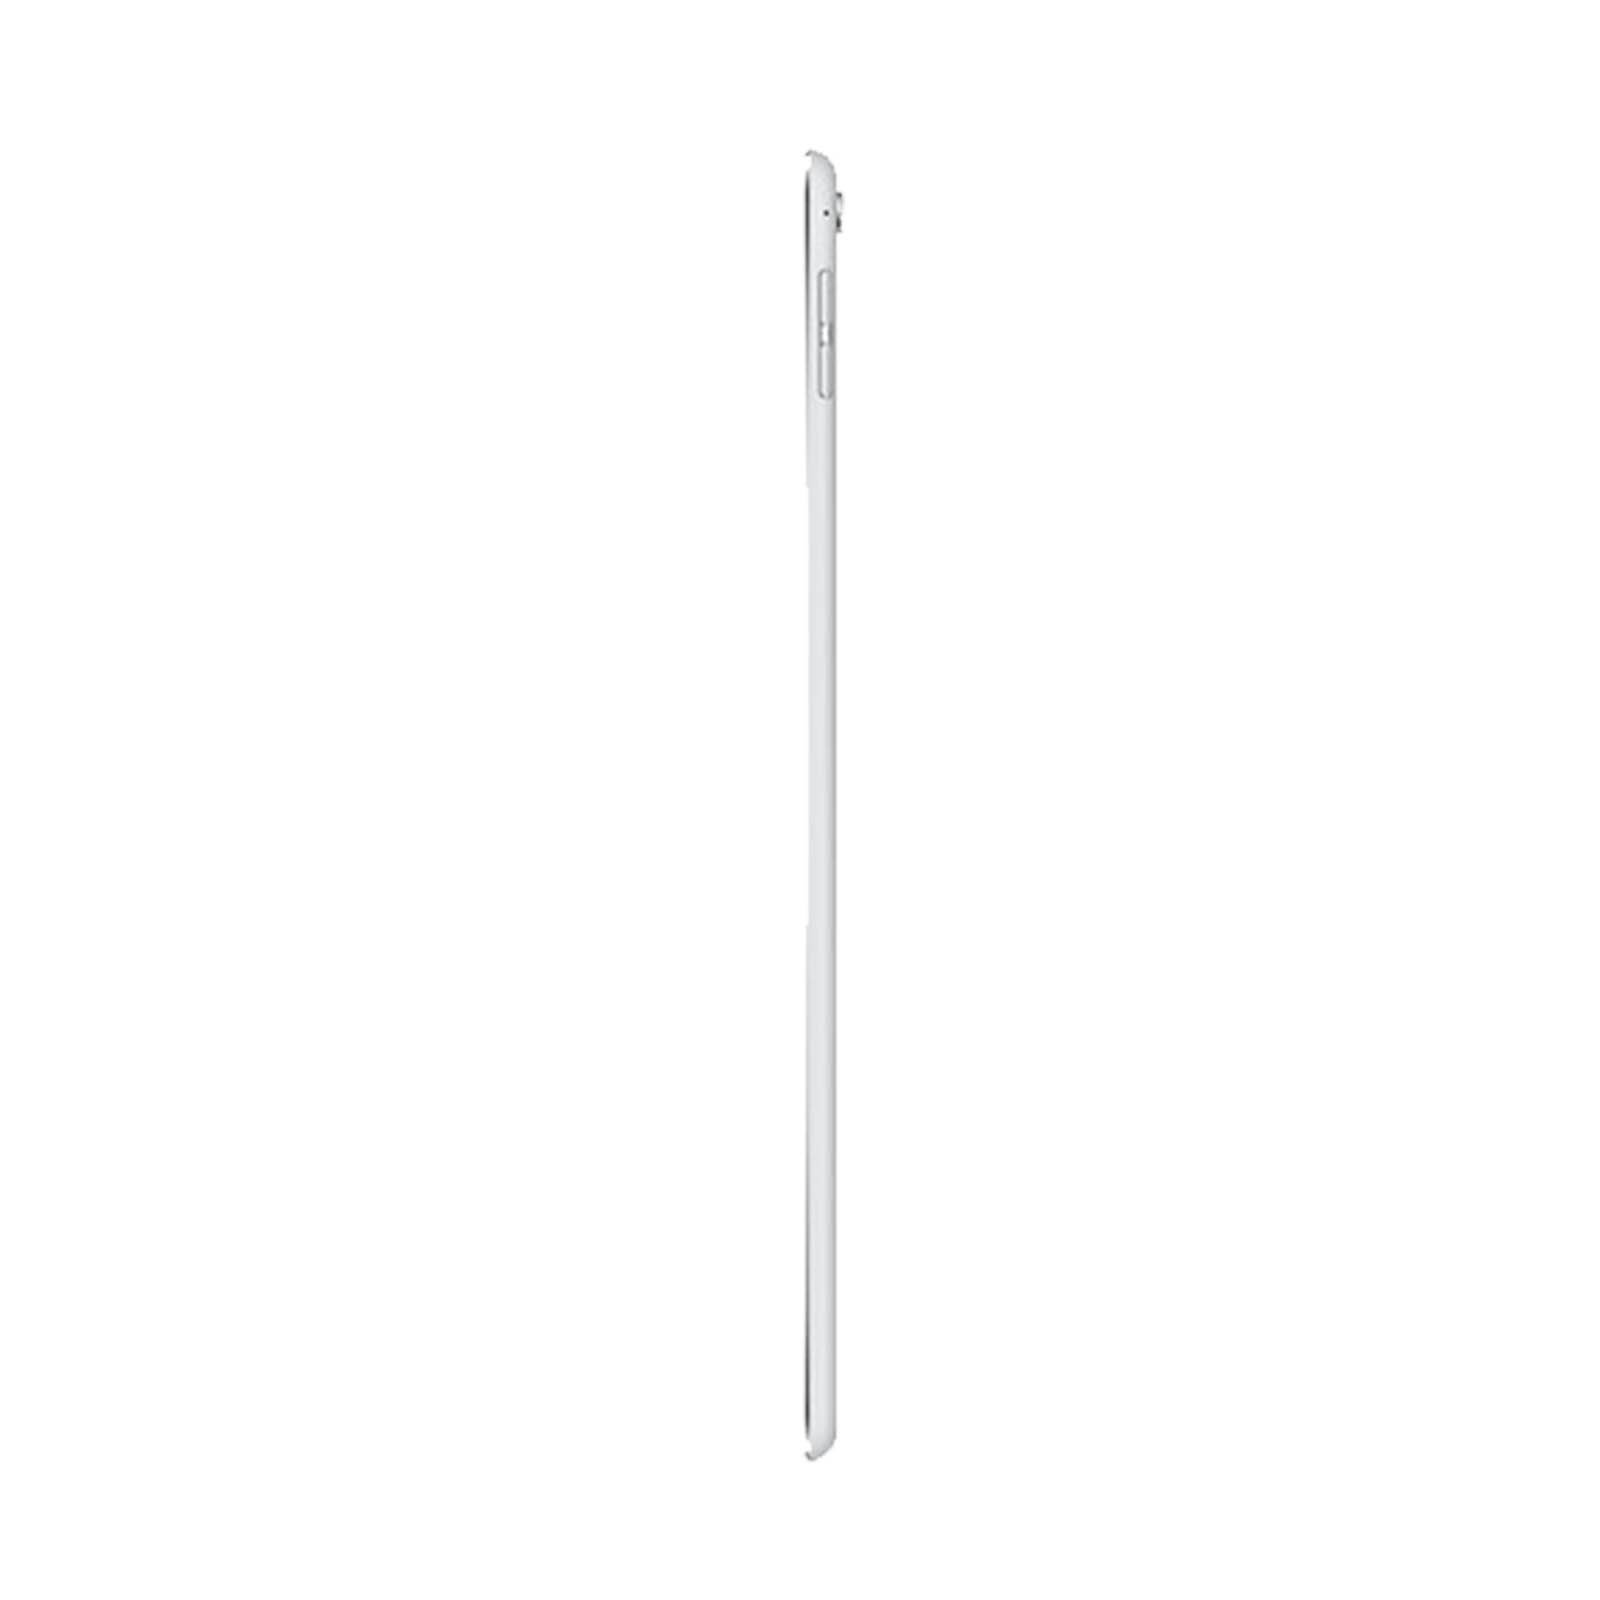 iPad Pro 9.7 Inch 32GB Silver Very Good - Unlocked